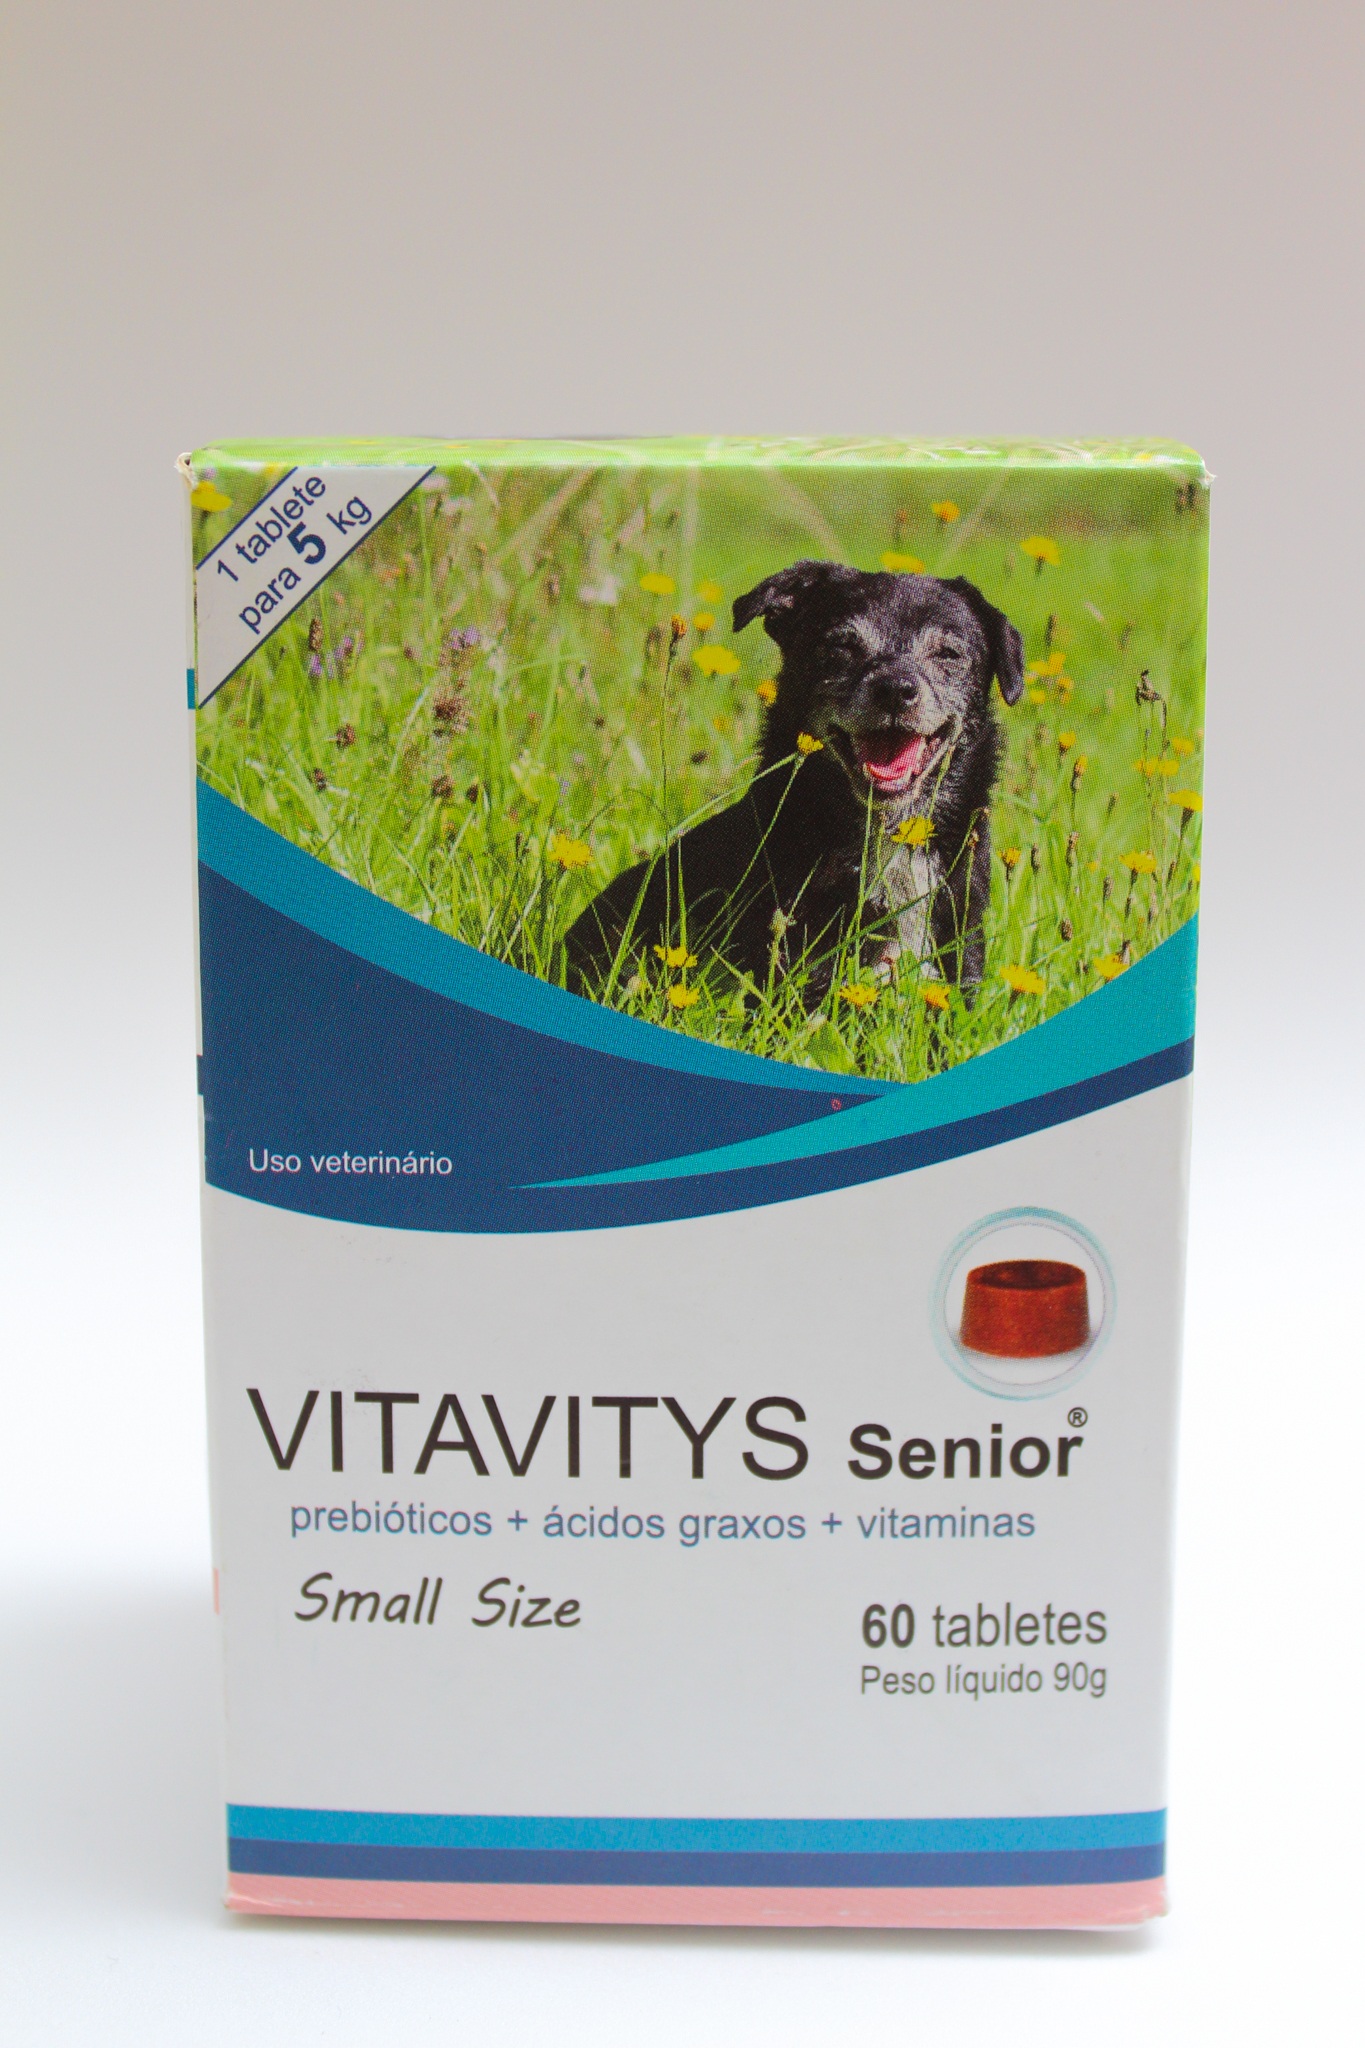 Vitavitys senior small size